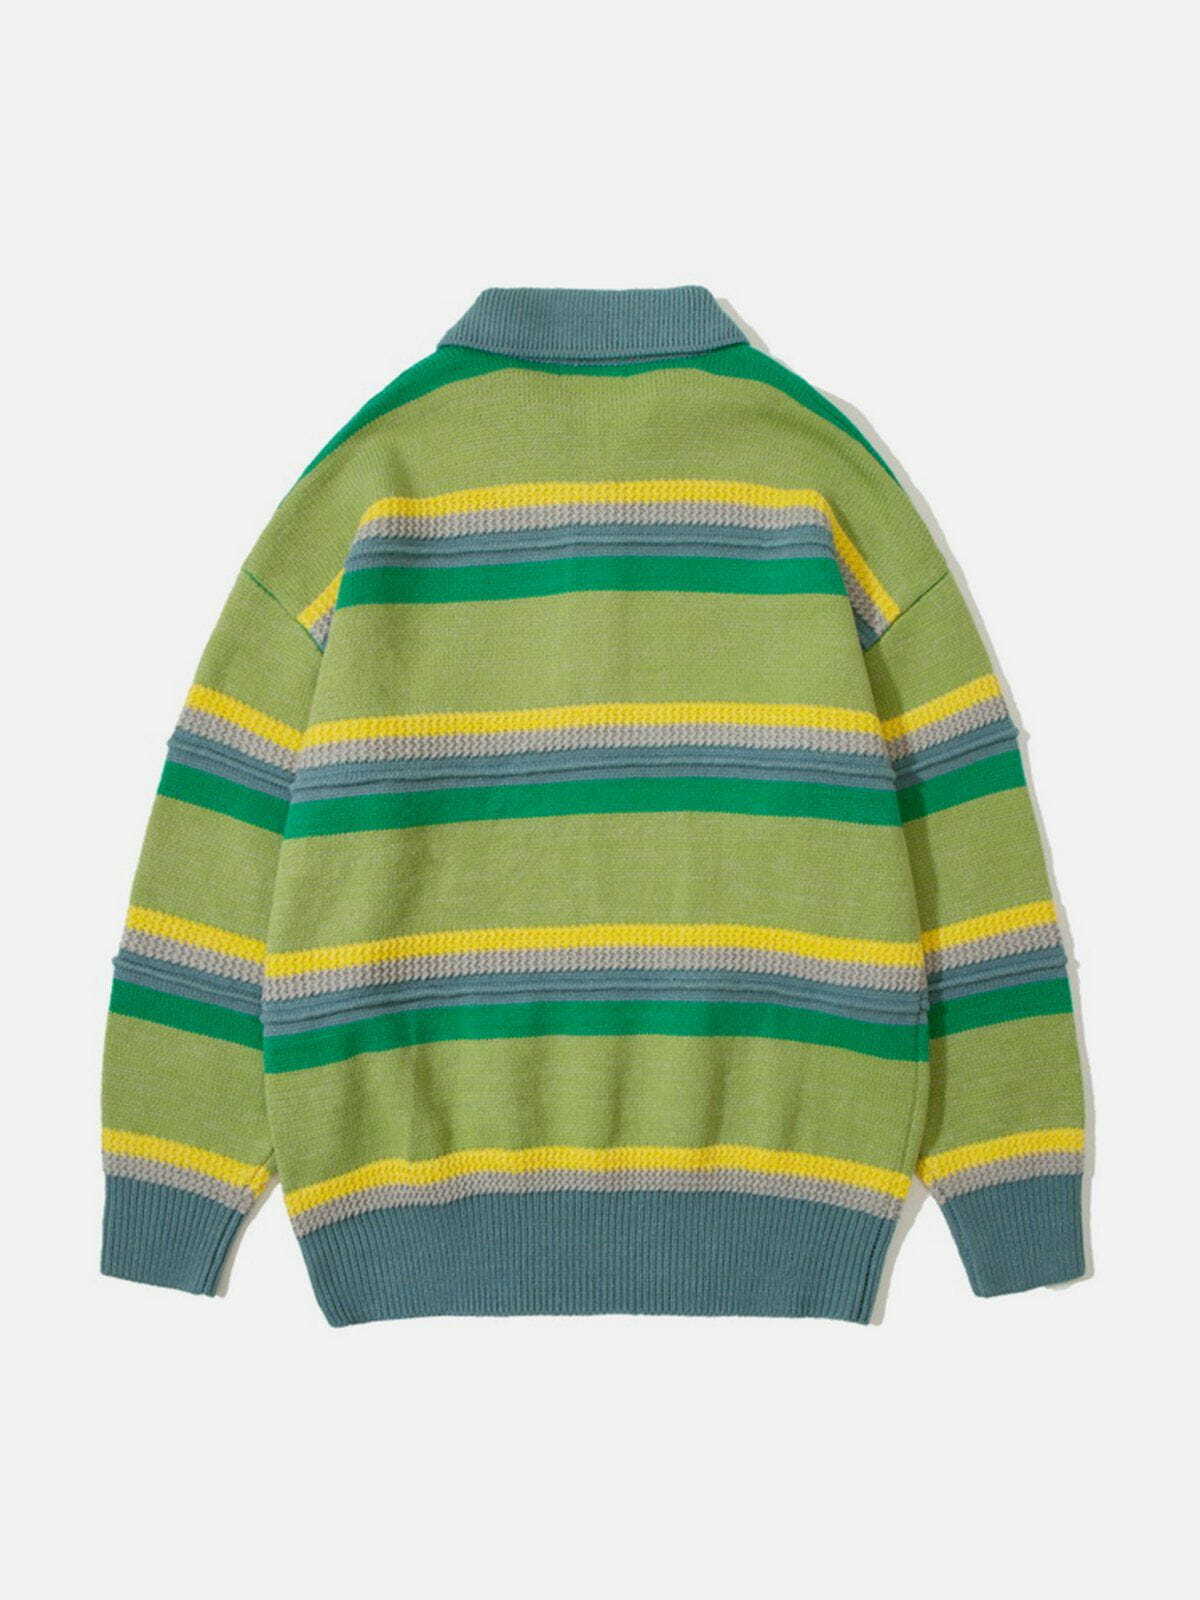 retro striped polo sweater classic & stylish streetwear 6062